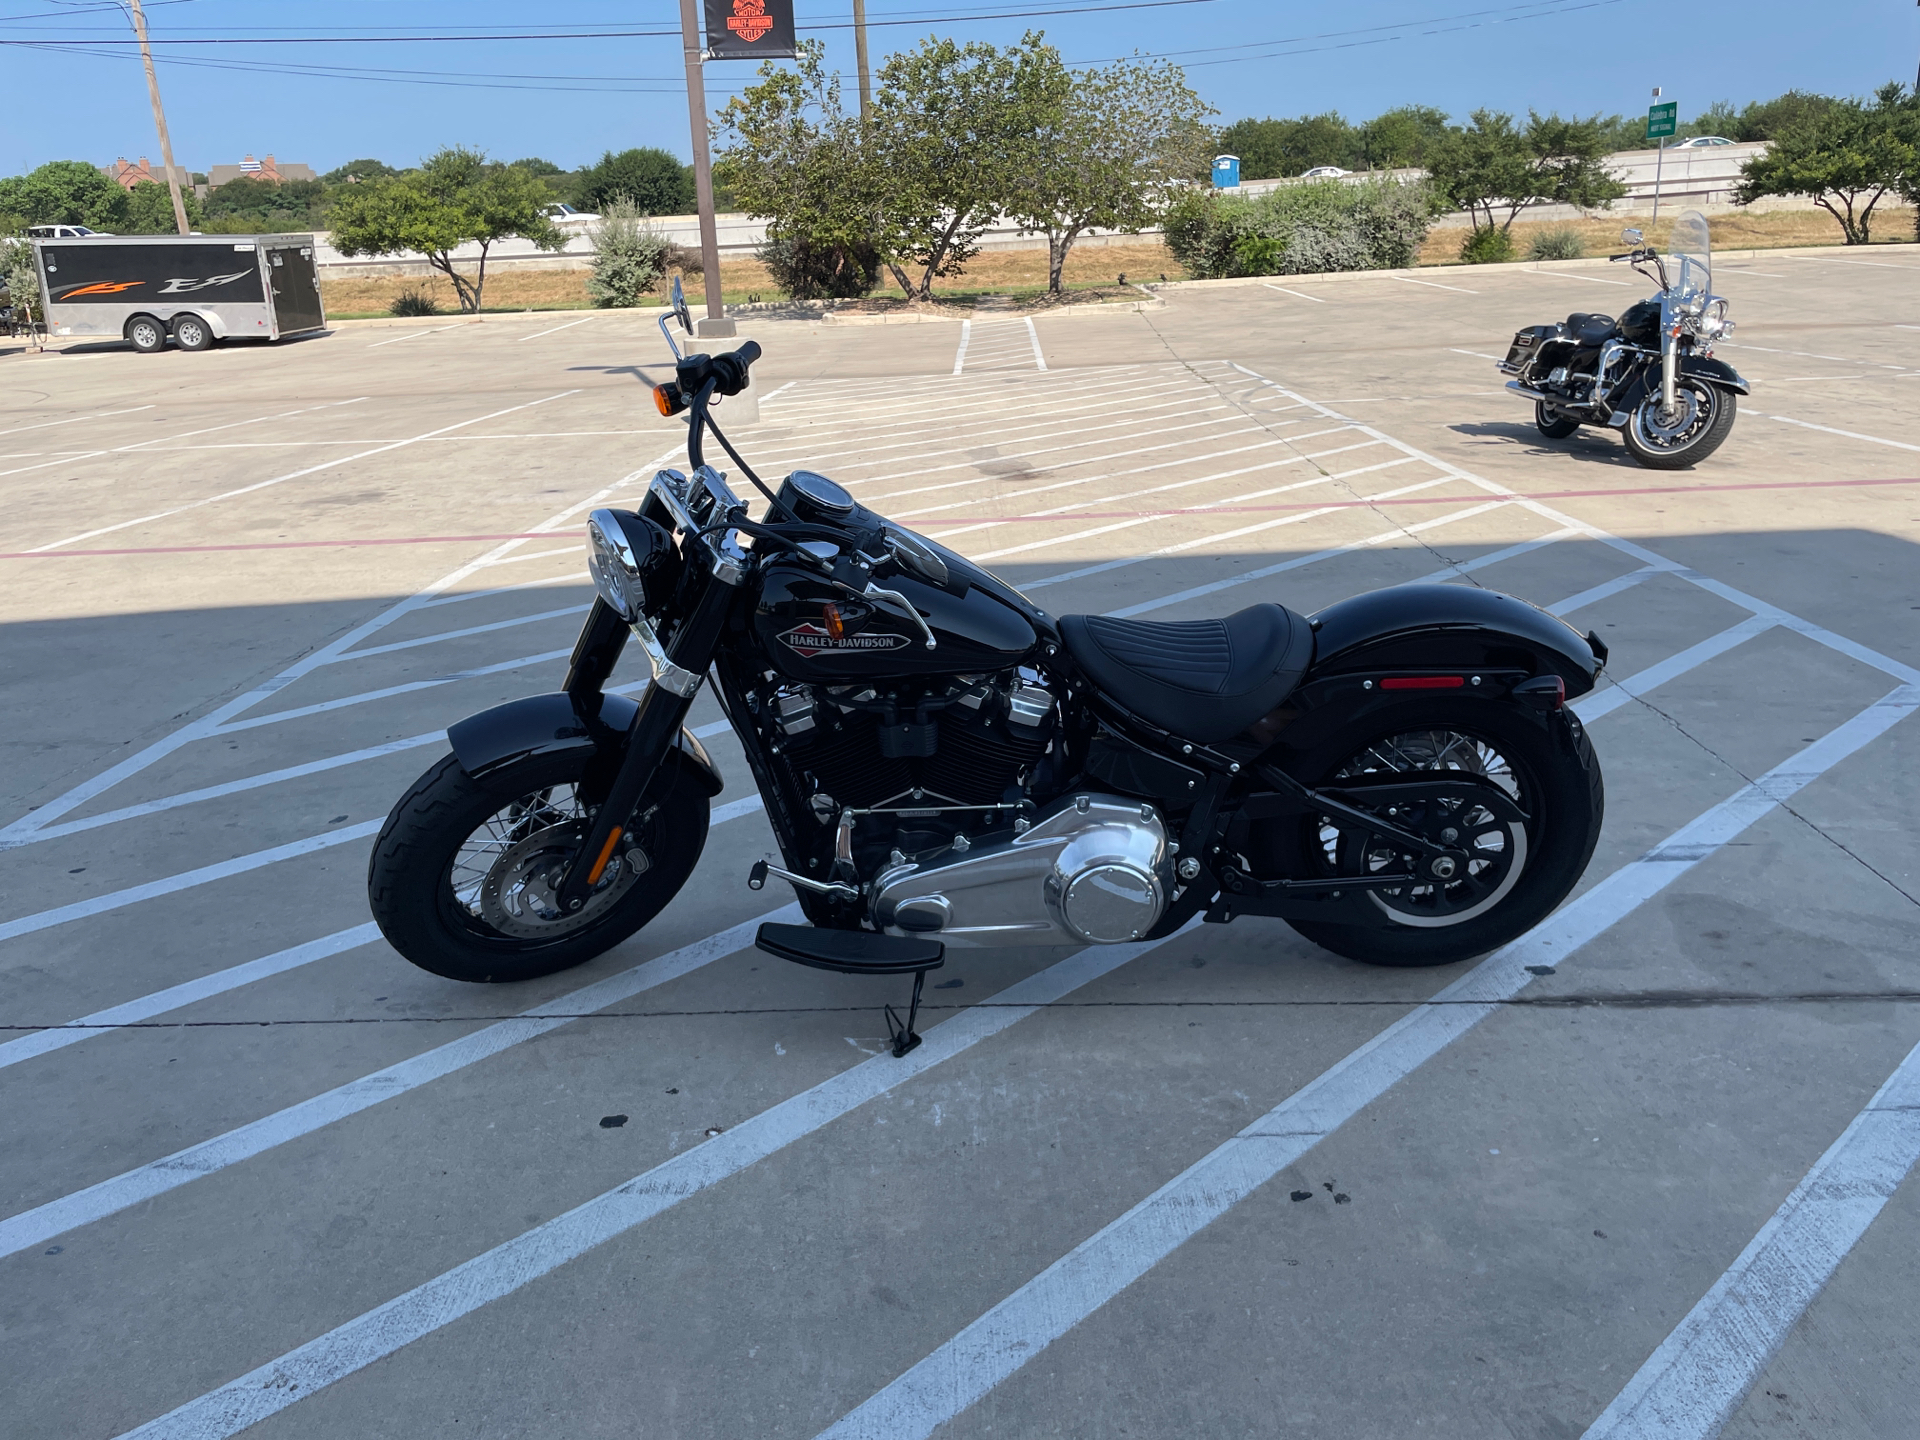 2020 Harley-Davidson Softail Slim® in San Antonio, Texas - Photo 5